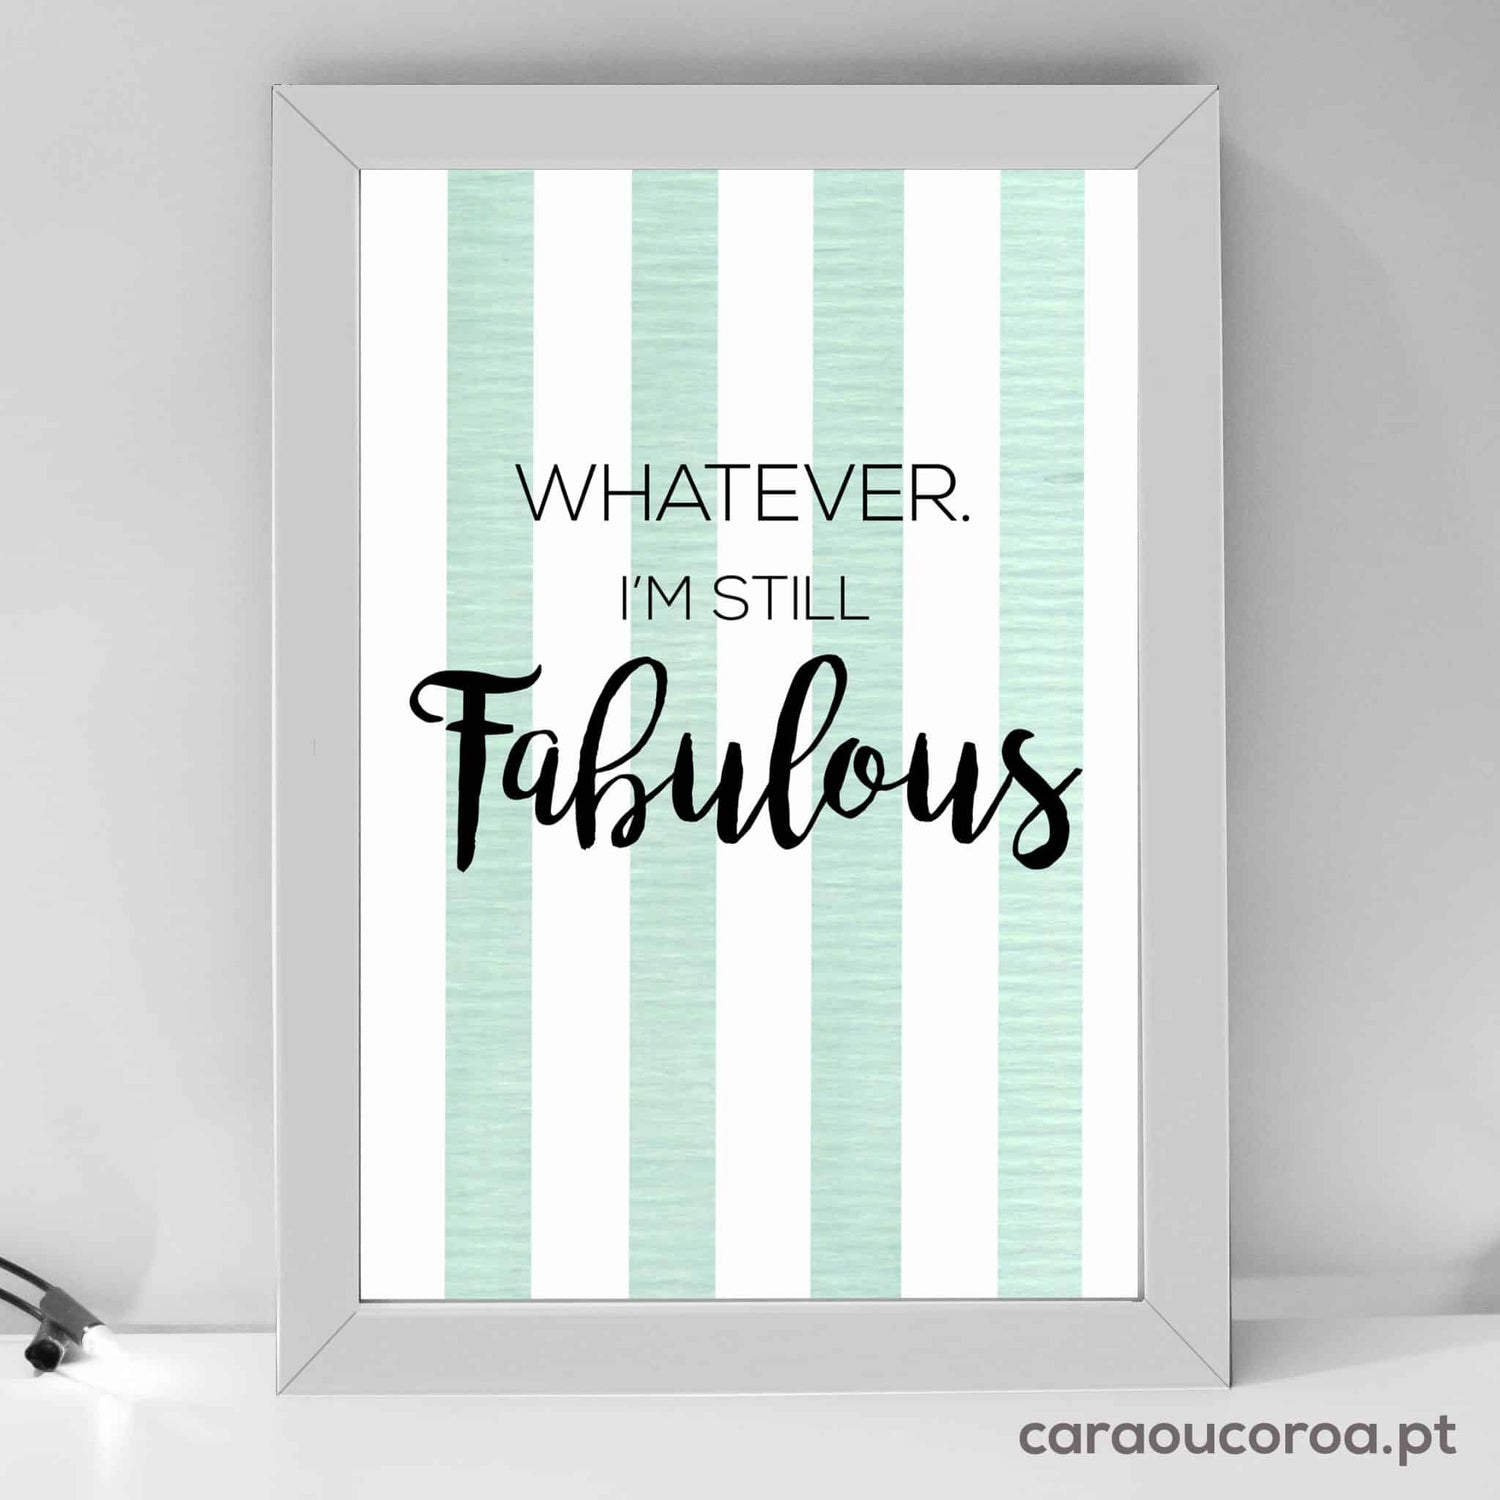 Quadro "Whatever. I'm Still Fabulous" - caraoucoroa.pt